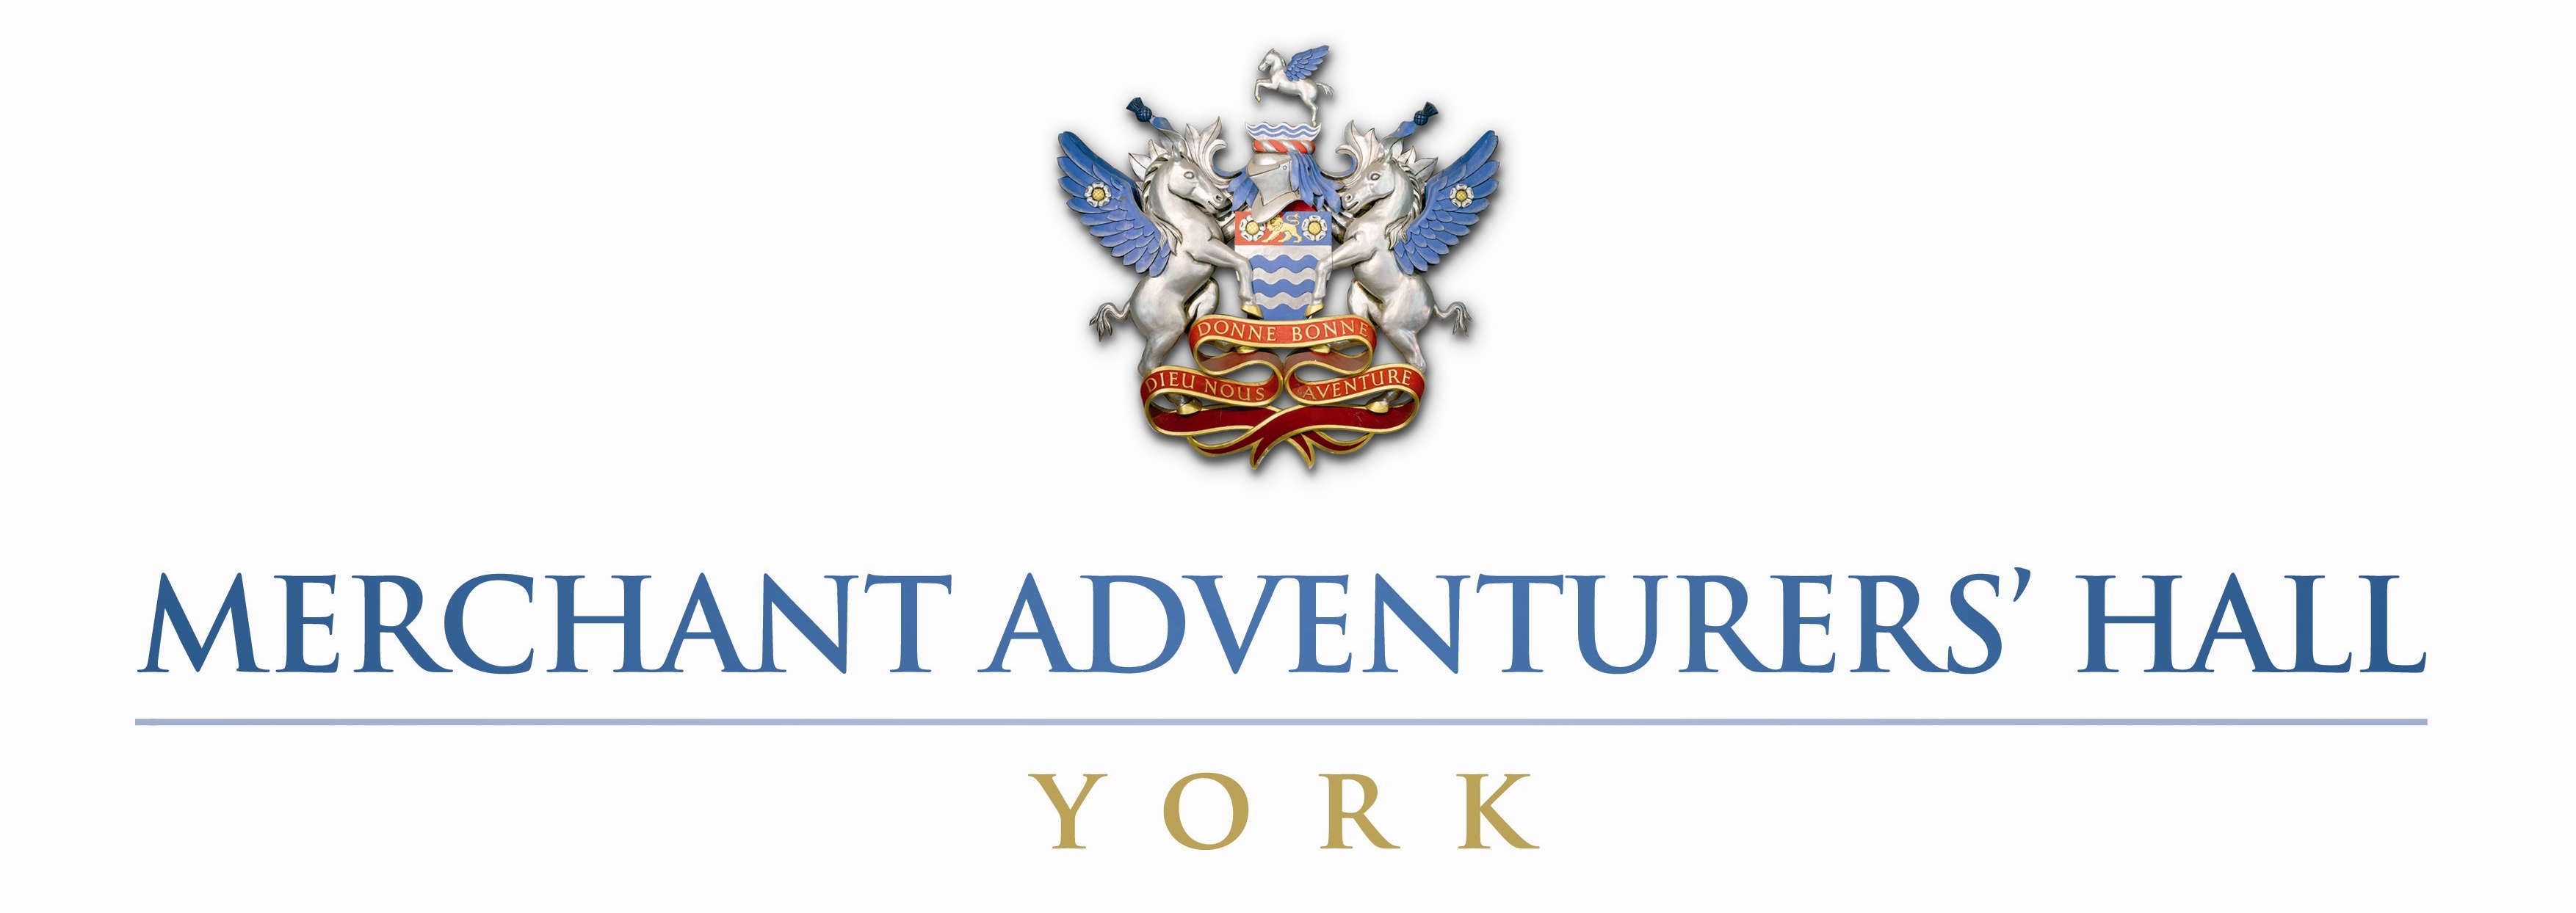 Merchant Adventurers Logo